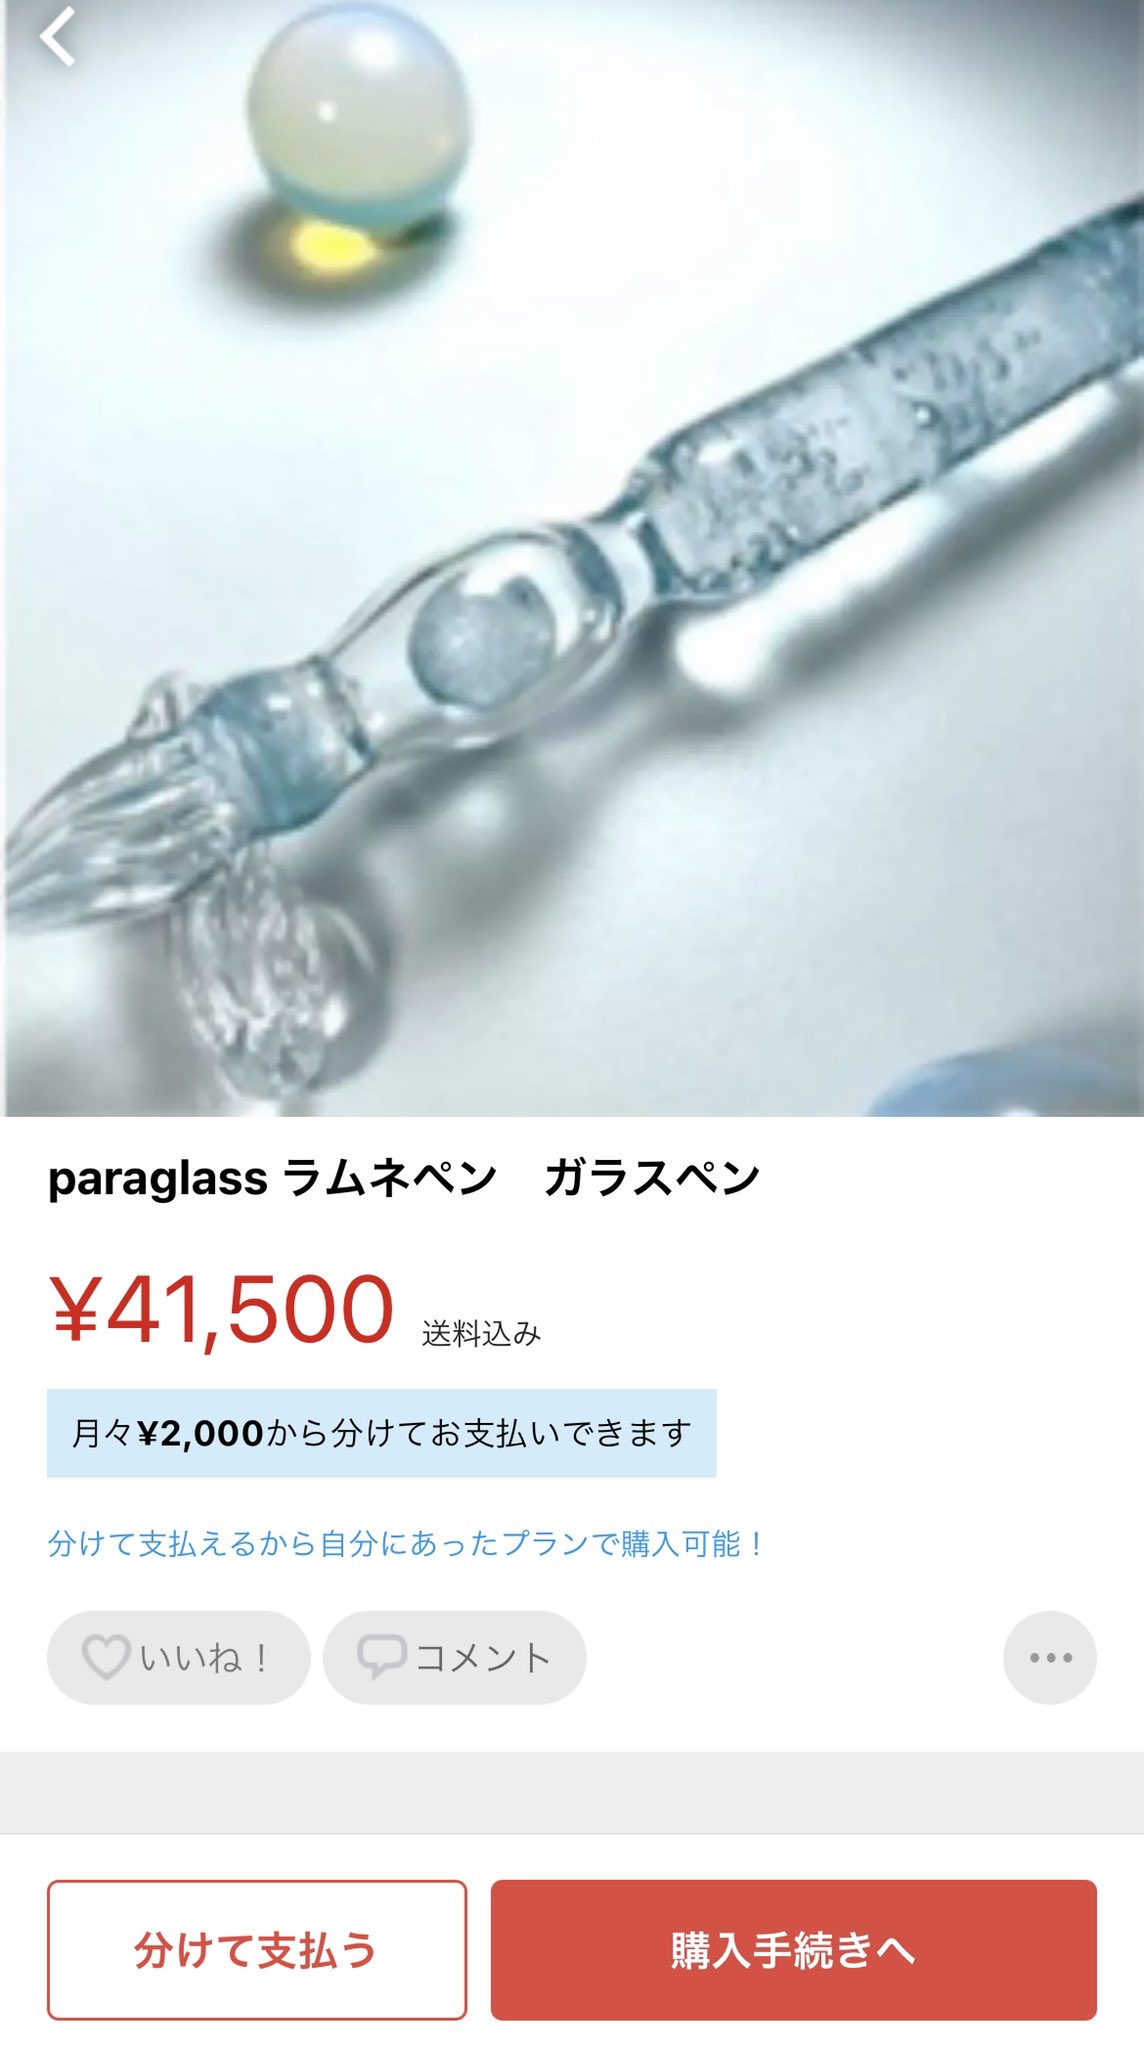 Paraglass（パラグラス） on X: 